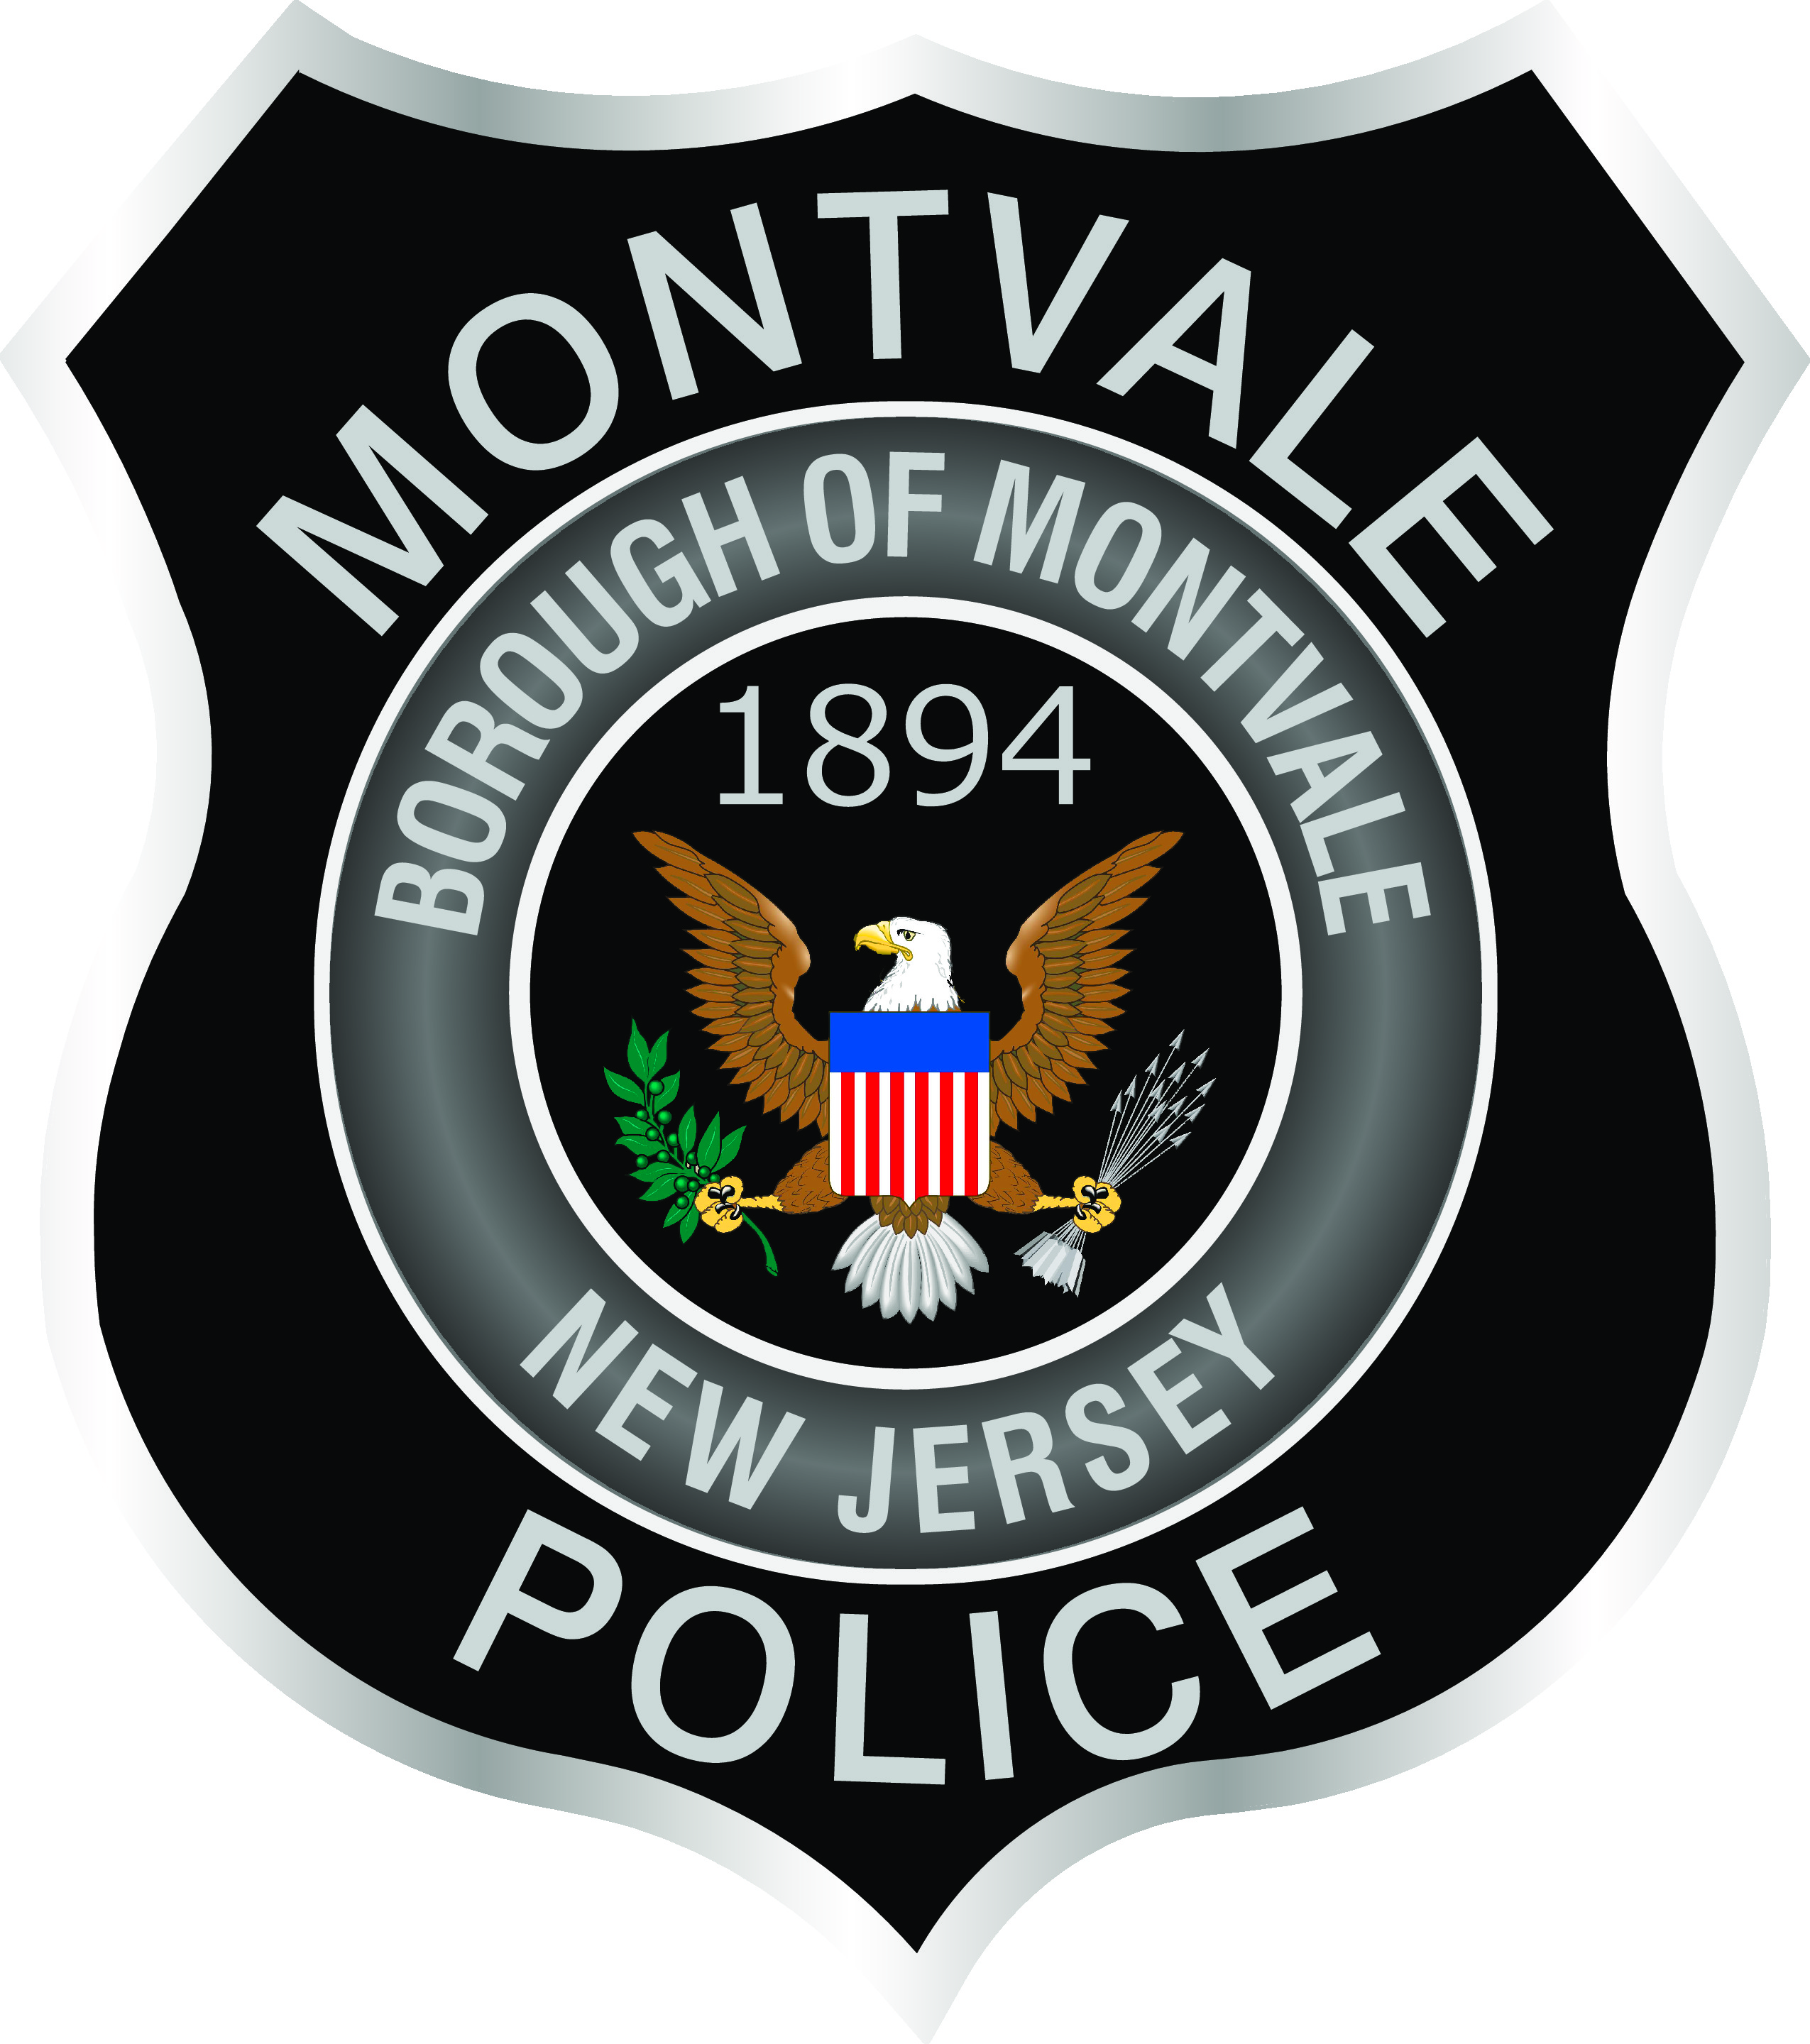 Montvale Police Department, NJ Police Jobs